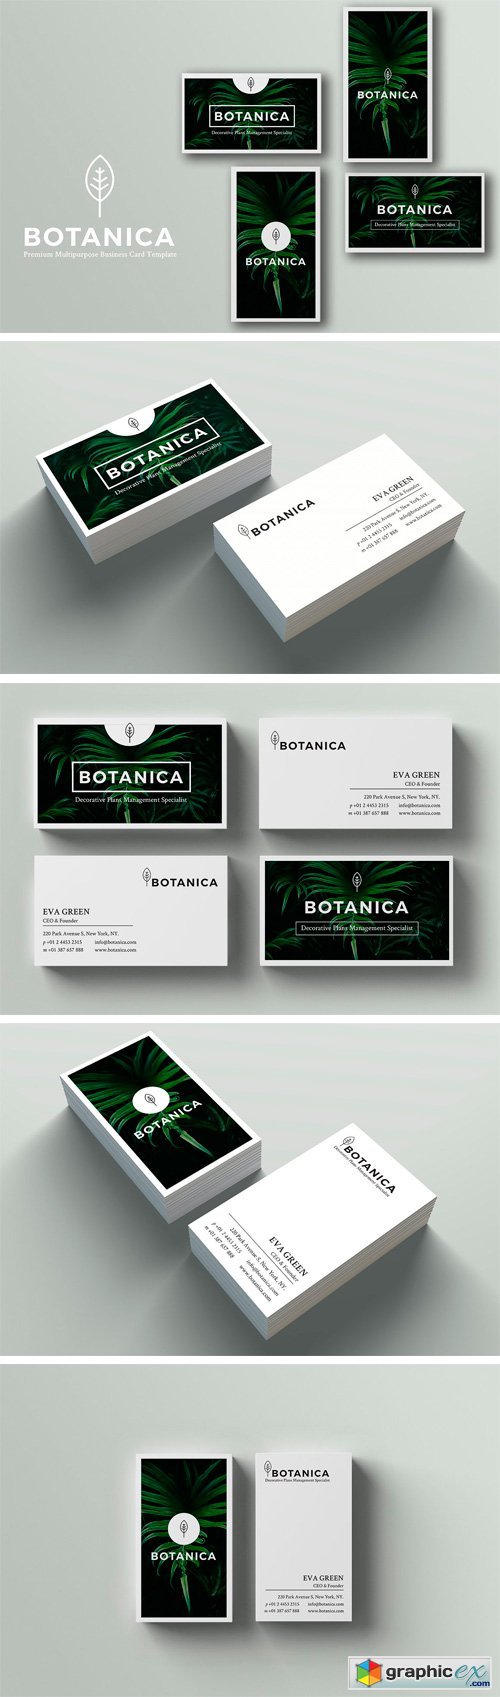 BOTANICA Business Card Template